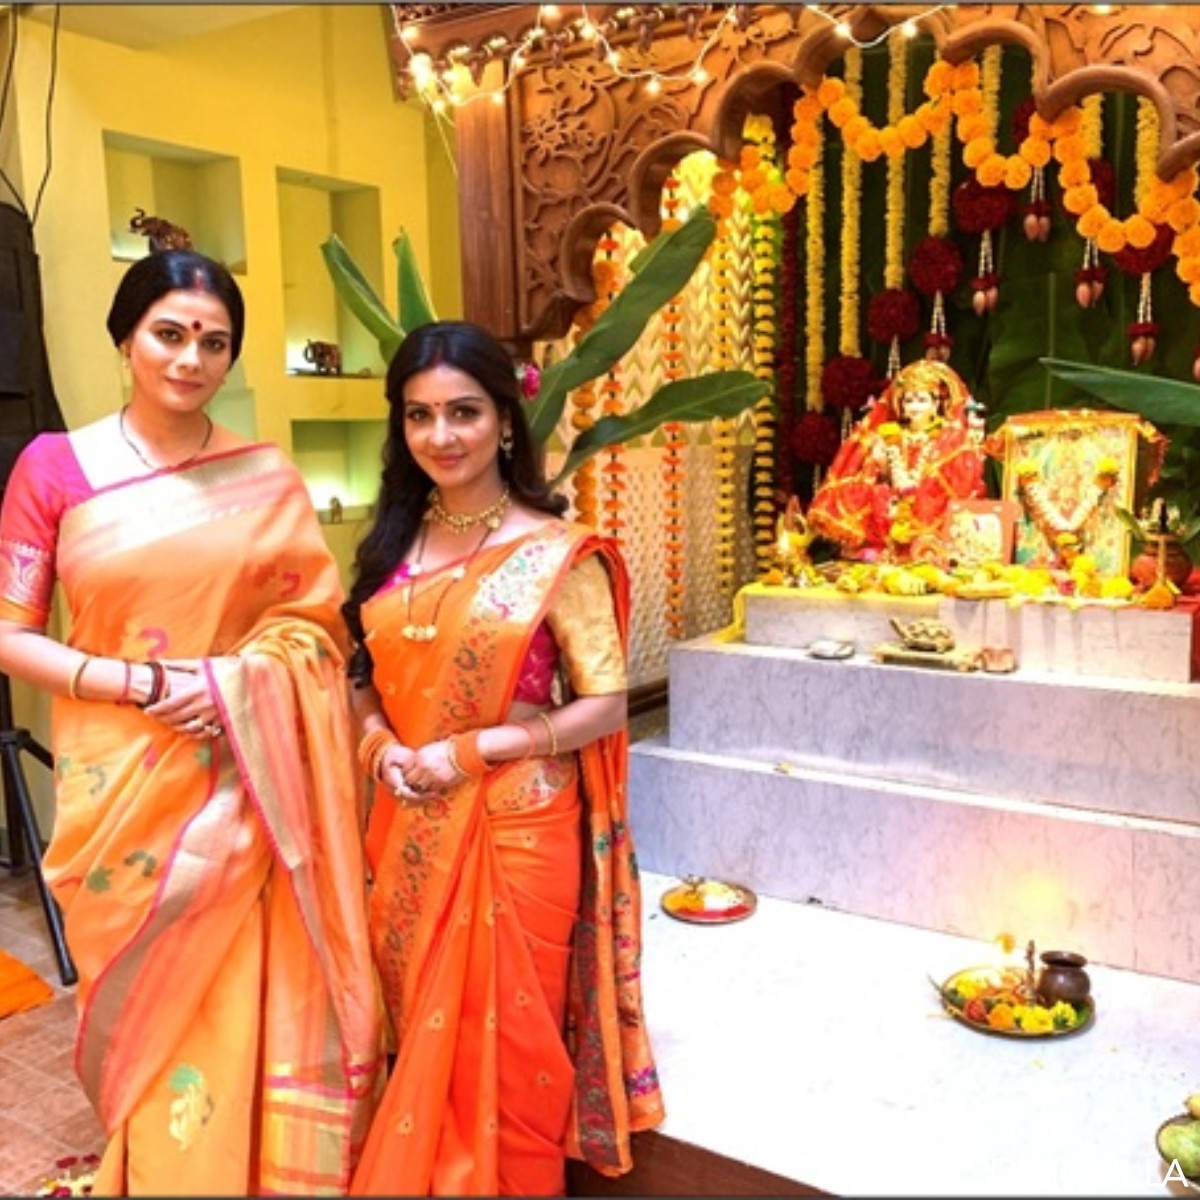 EXCLUSIVE PHOTOS: Shubh Laabh Aapkey Ghar Mein cast performs a grand Lakshmi pooja on sets